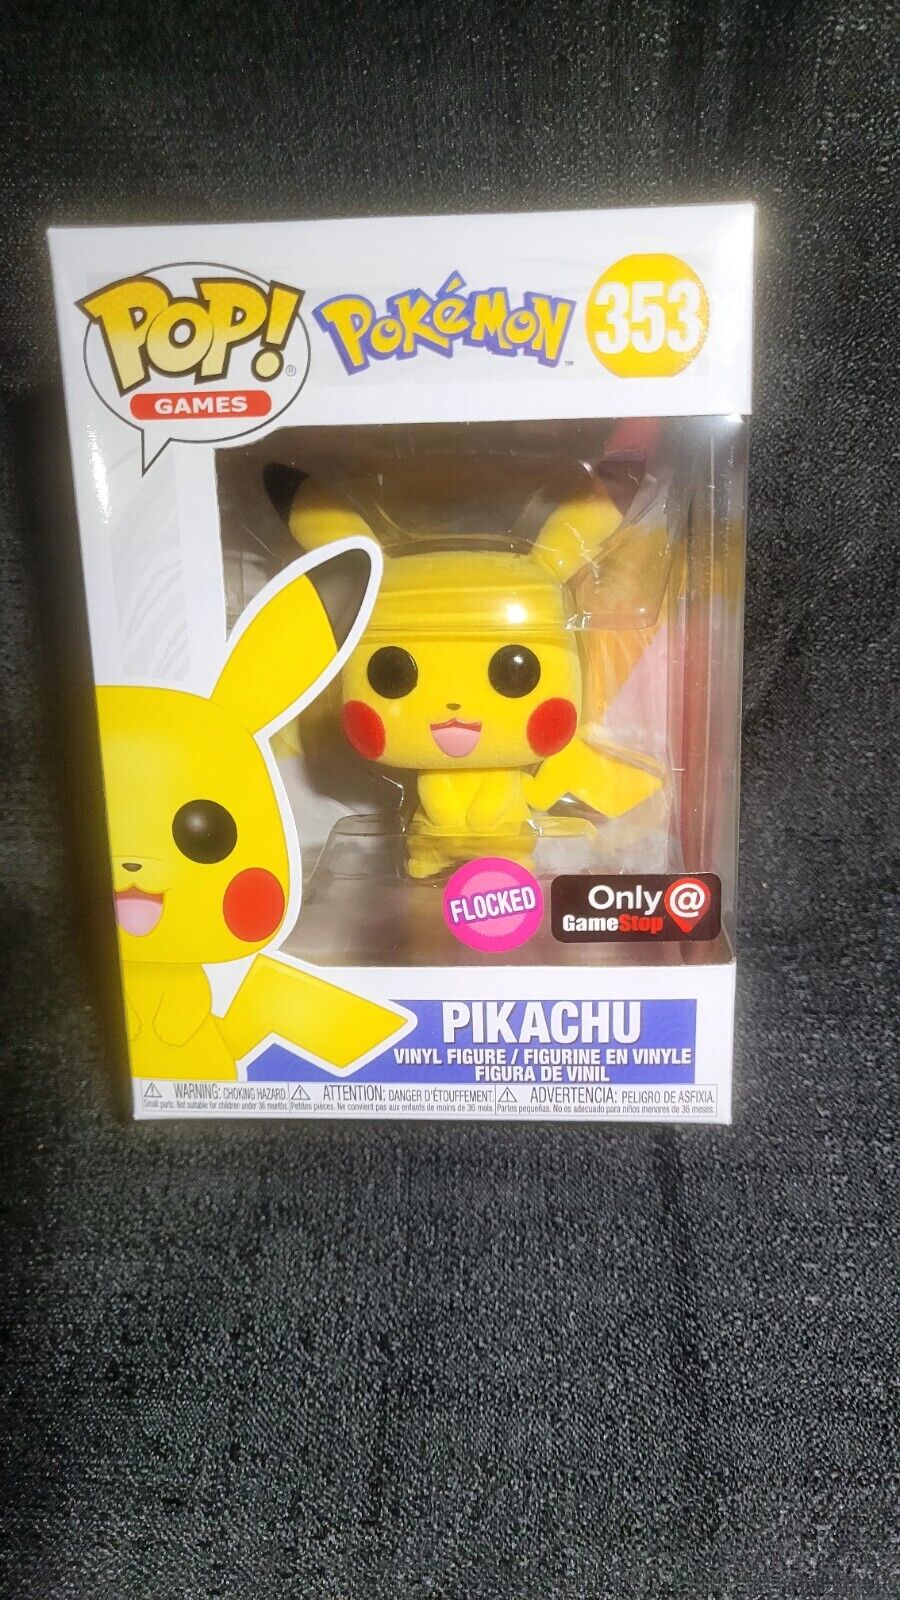 Pikachu (Flocked) #353 Pokemon Gamestop Edition Funko Pop Figure W/ Protecter